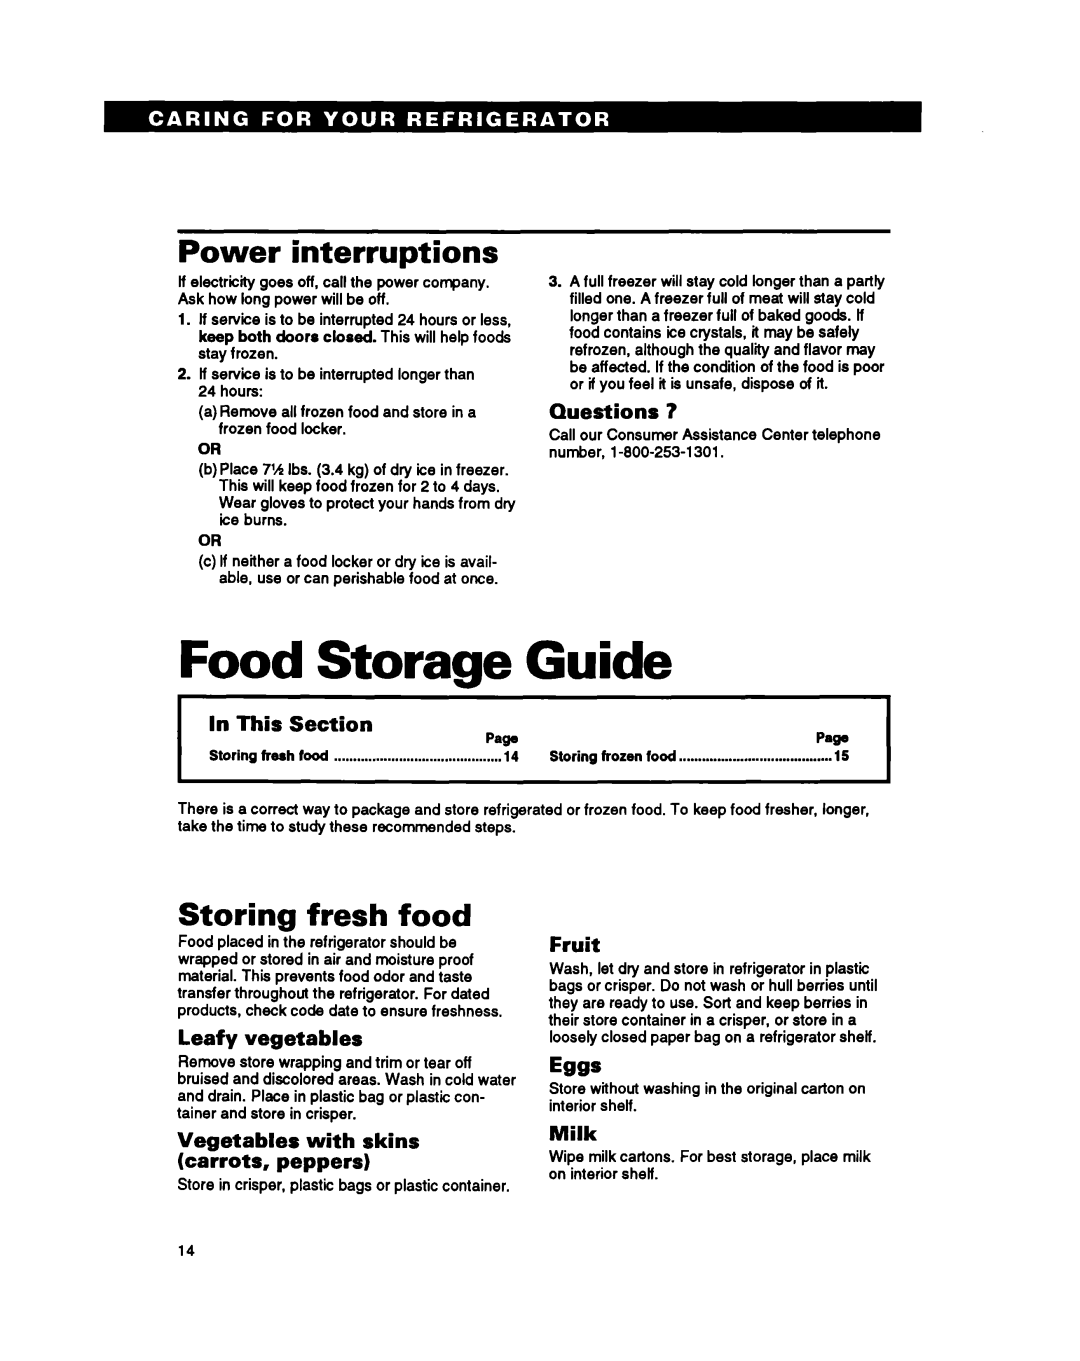 Estate TT14CK Food Storage Guide, Power interruptions, Storing fresh food, Questions t, Leafy vegetables, Fruit, Milk 